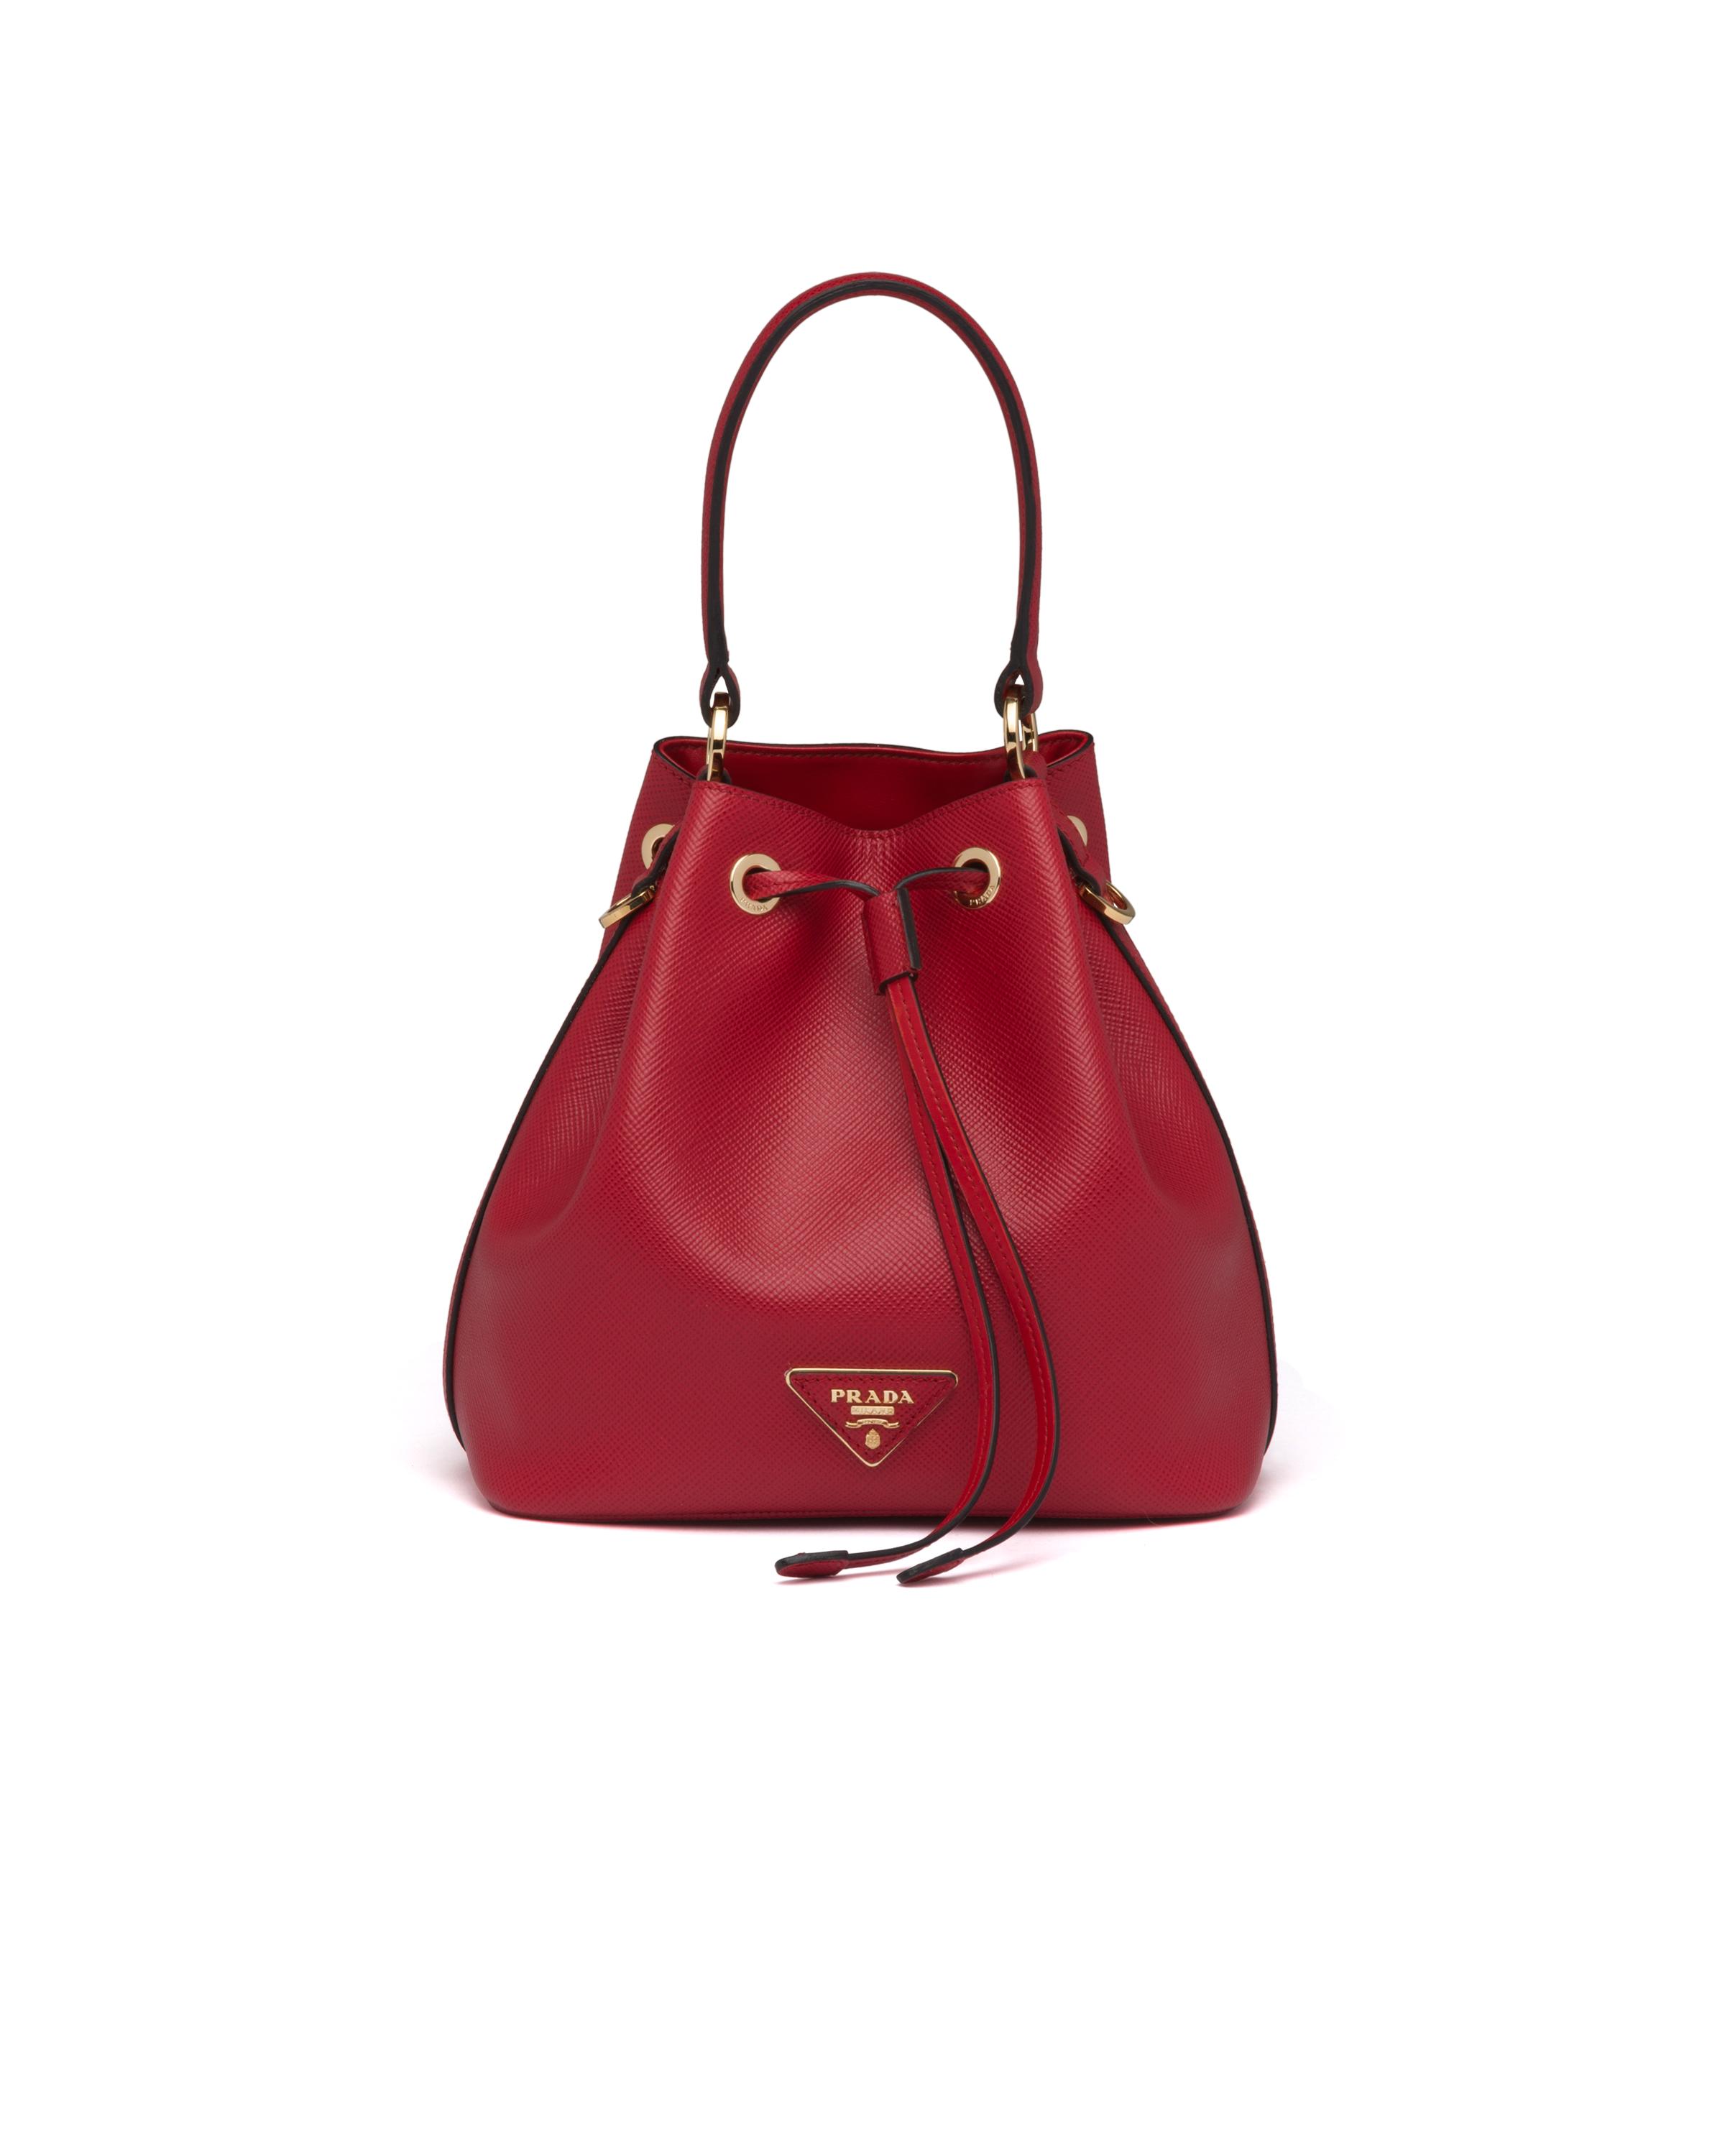 Prada Saffiano Leather Bucket Bag in Red | Lyst